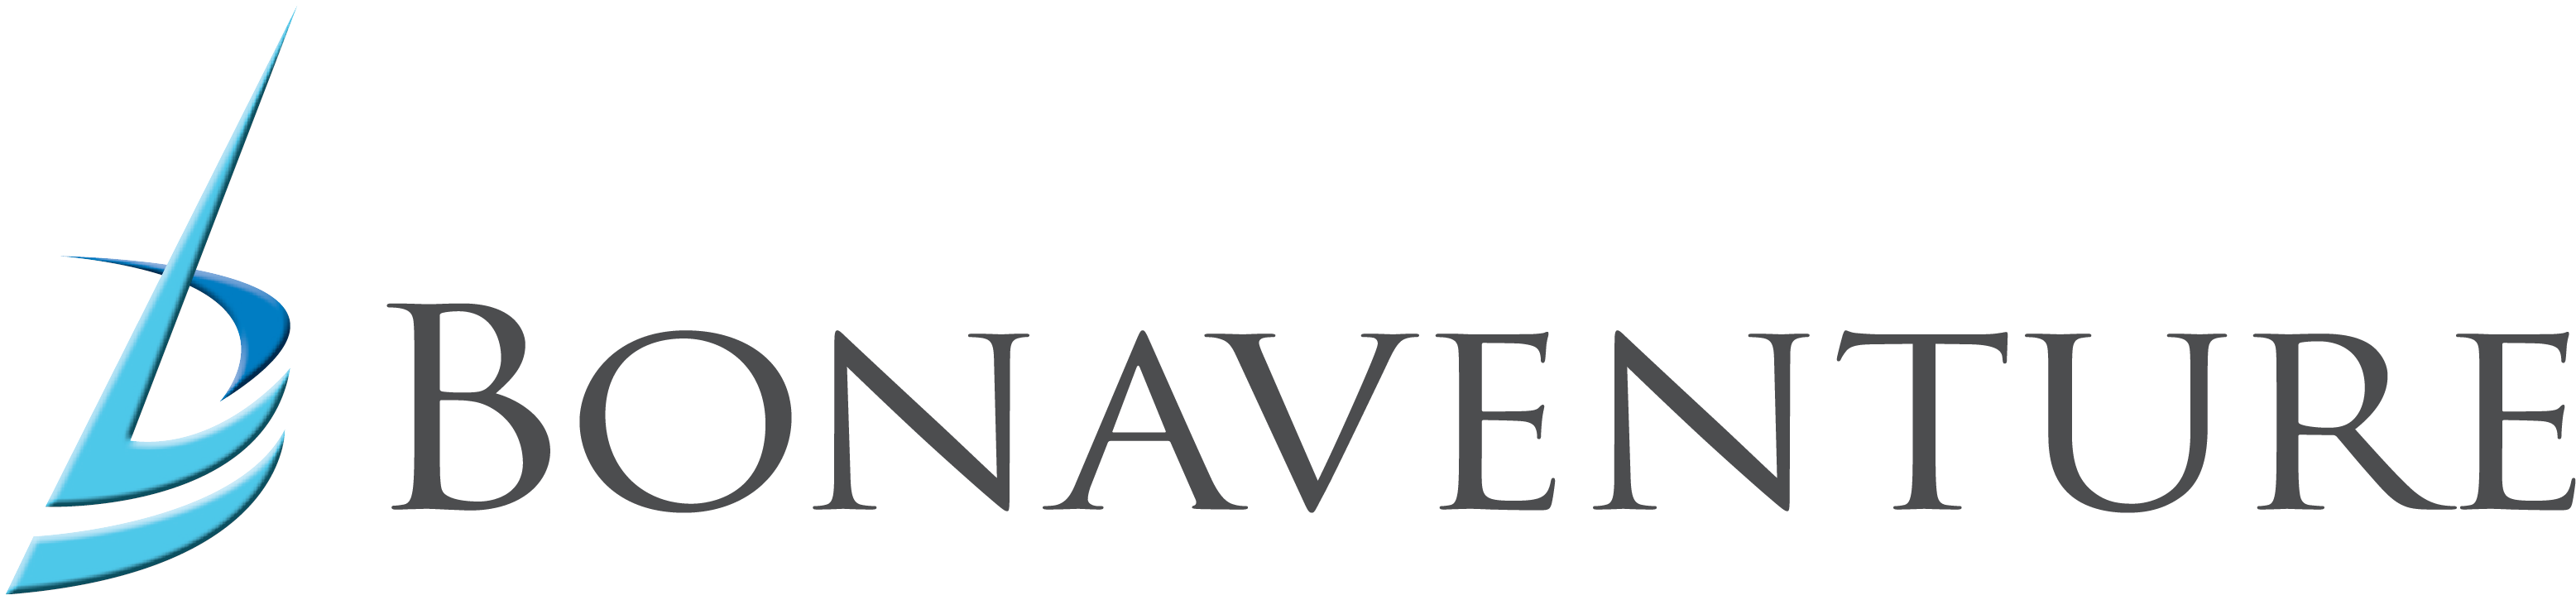 Bonaventure logo